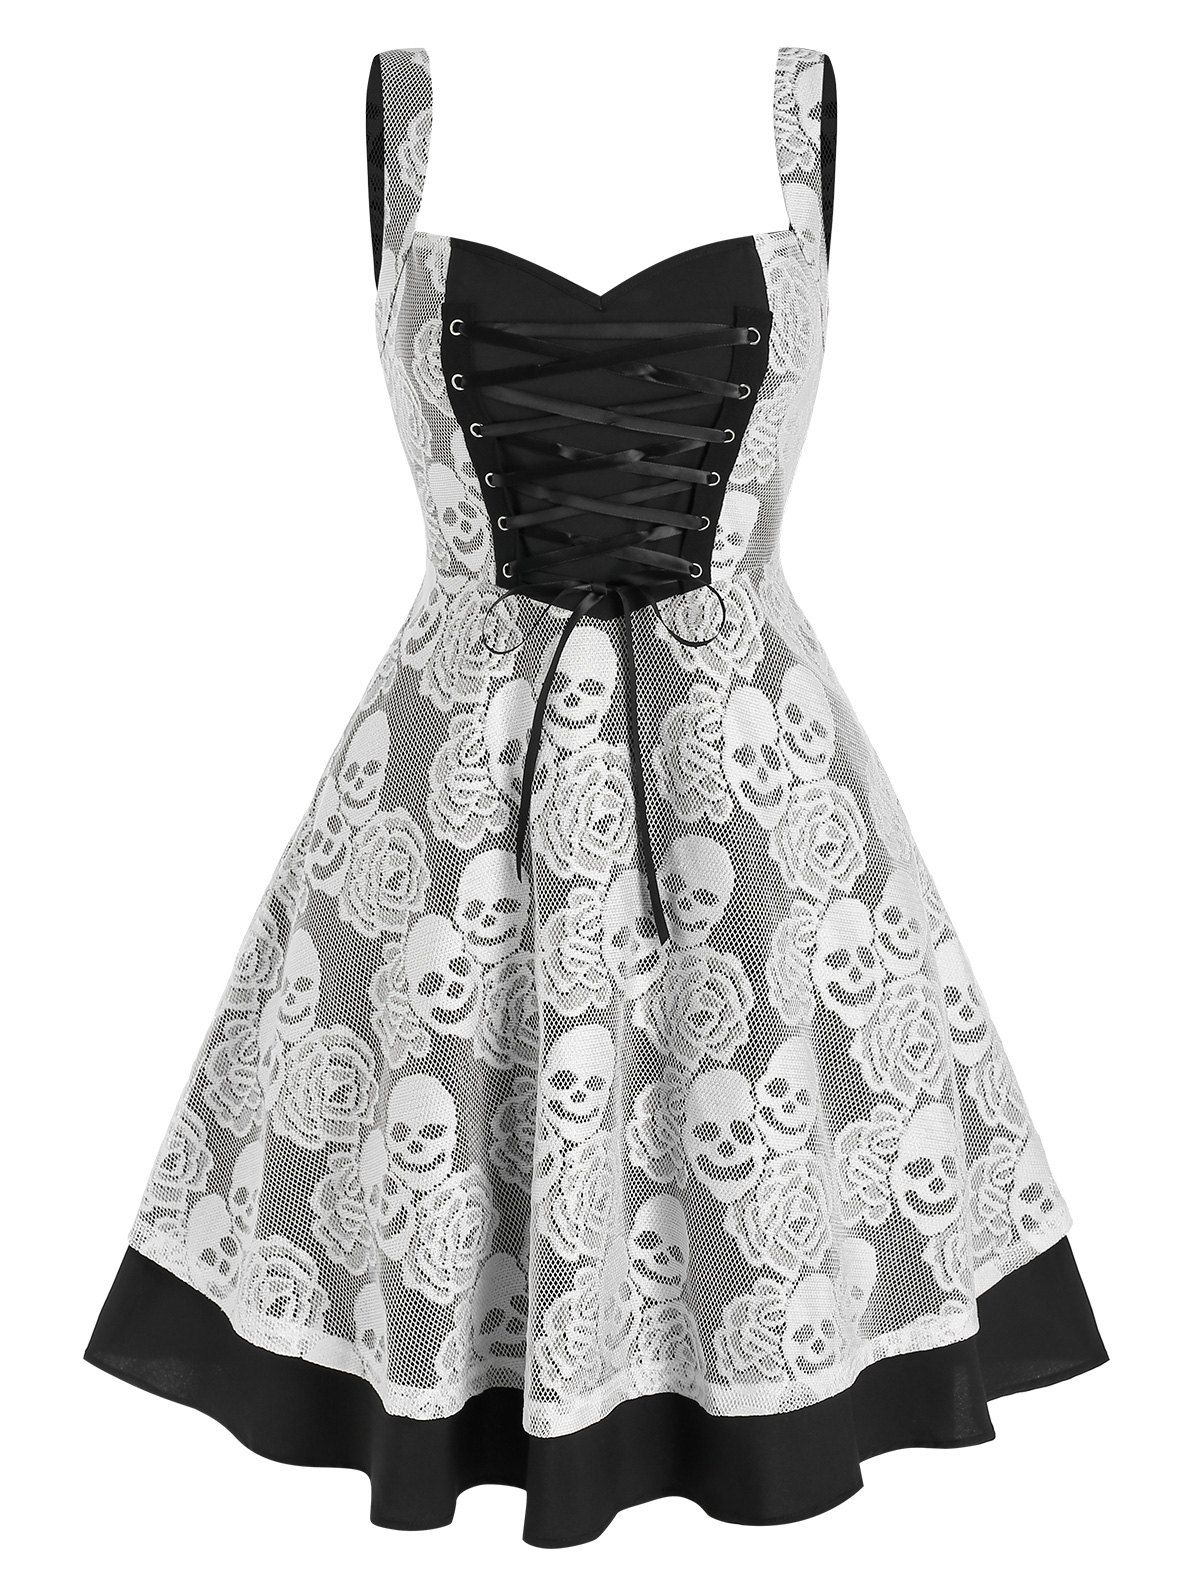 Skull Pattern See Thru Lace Insert Halloween Dress Lace Up Sweetheart Neck Flare Dress - BLACK XL